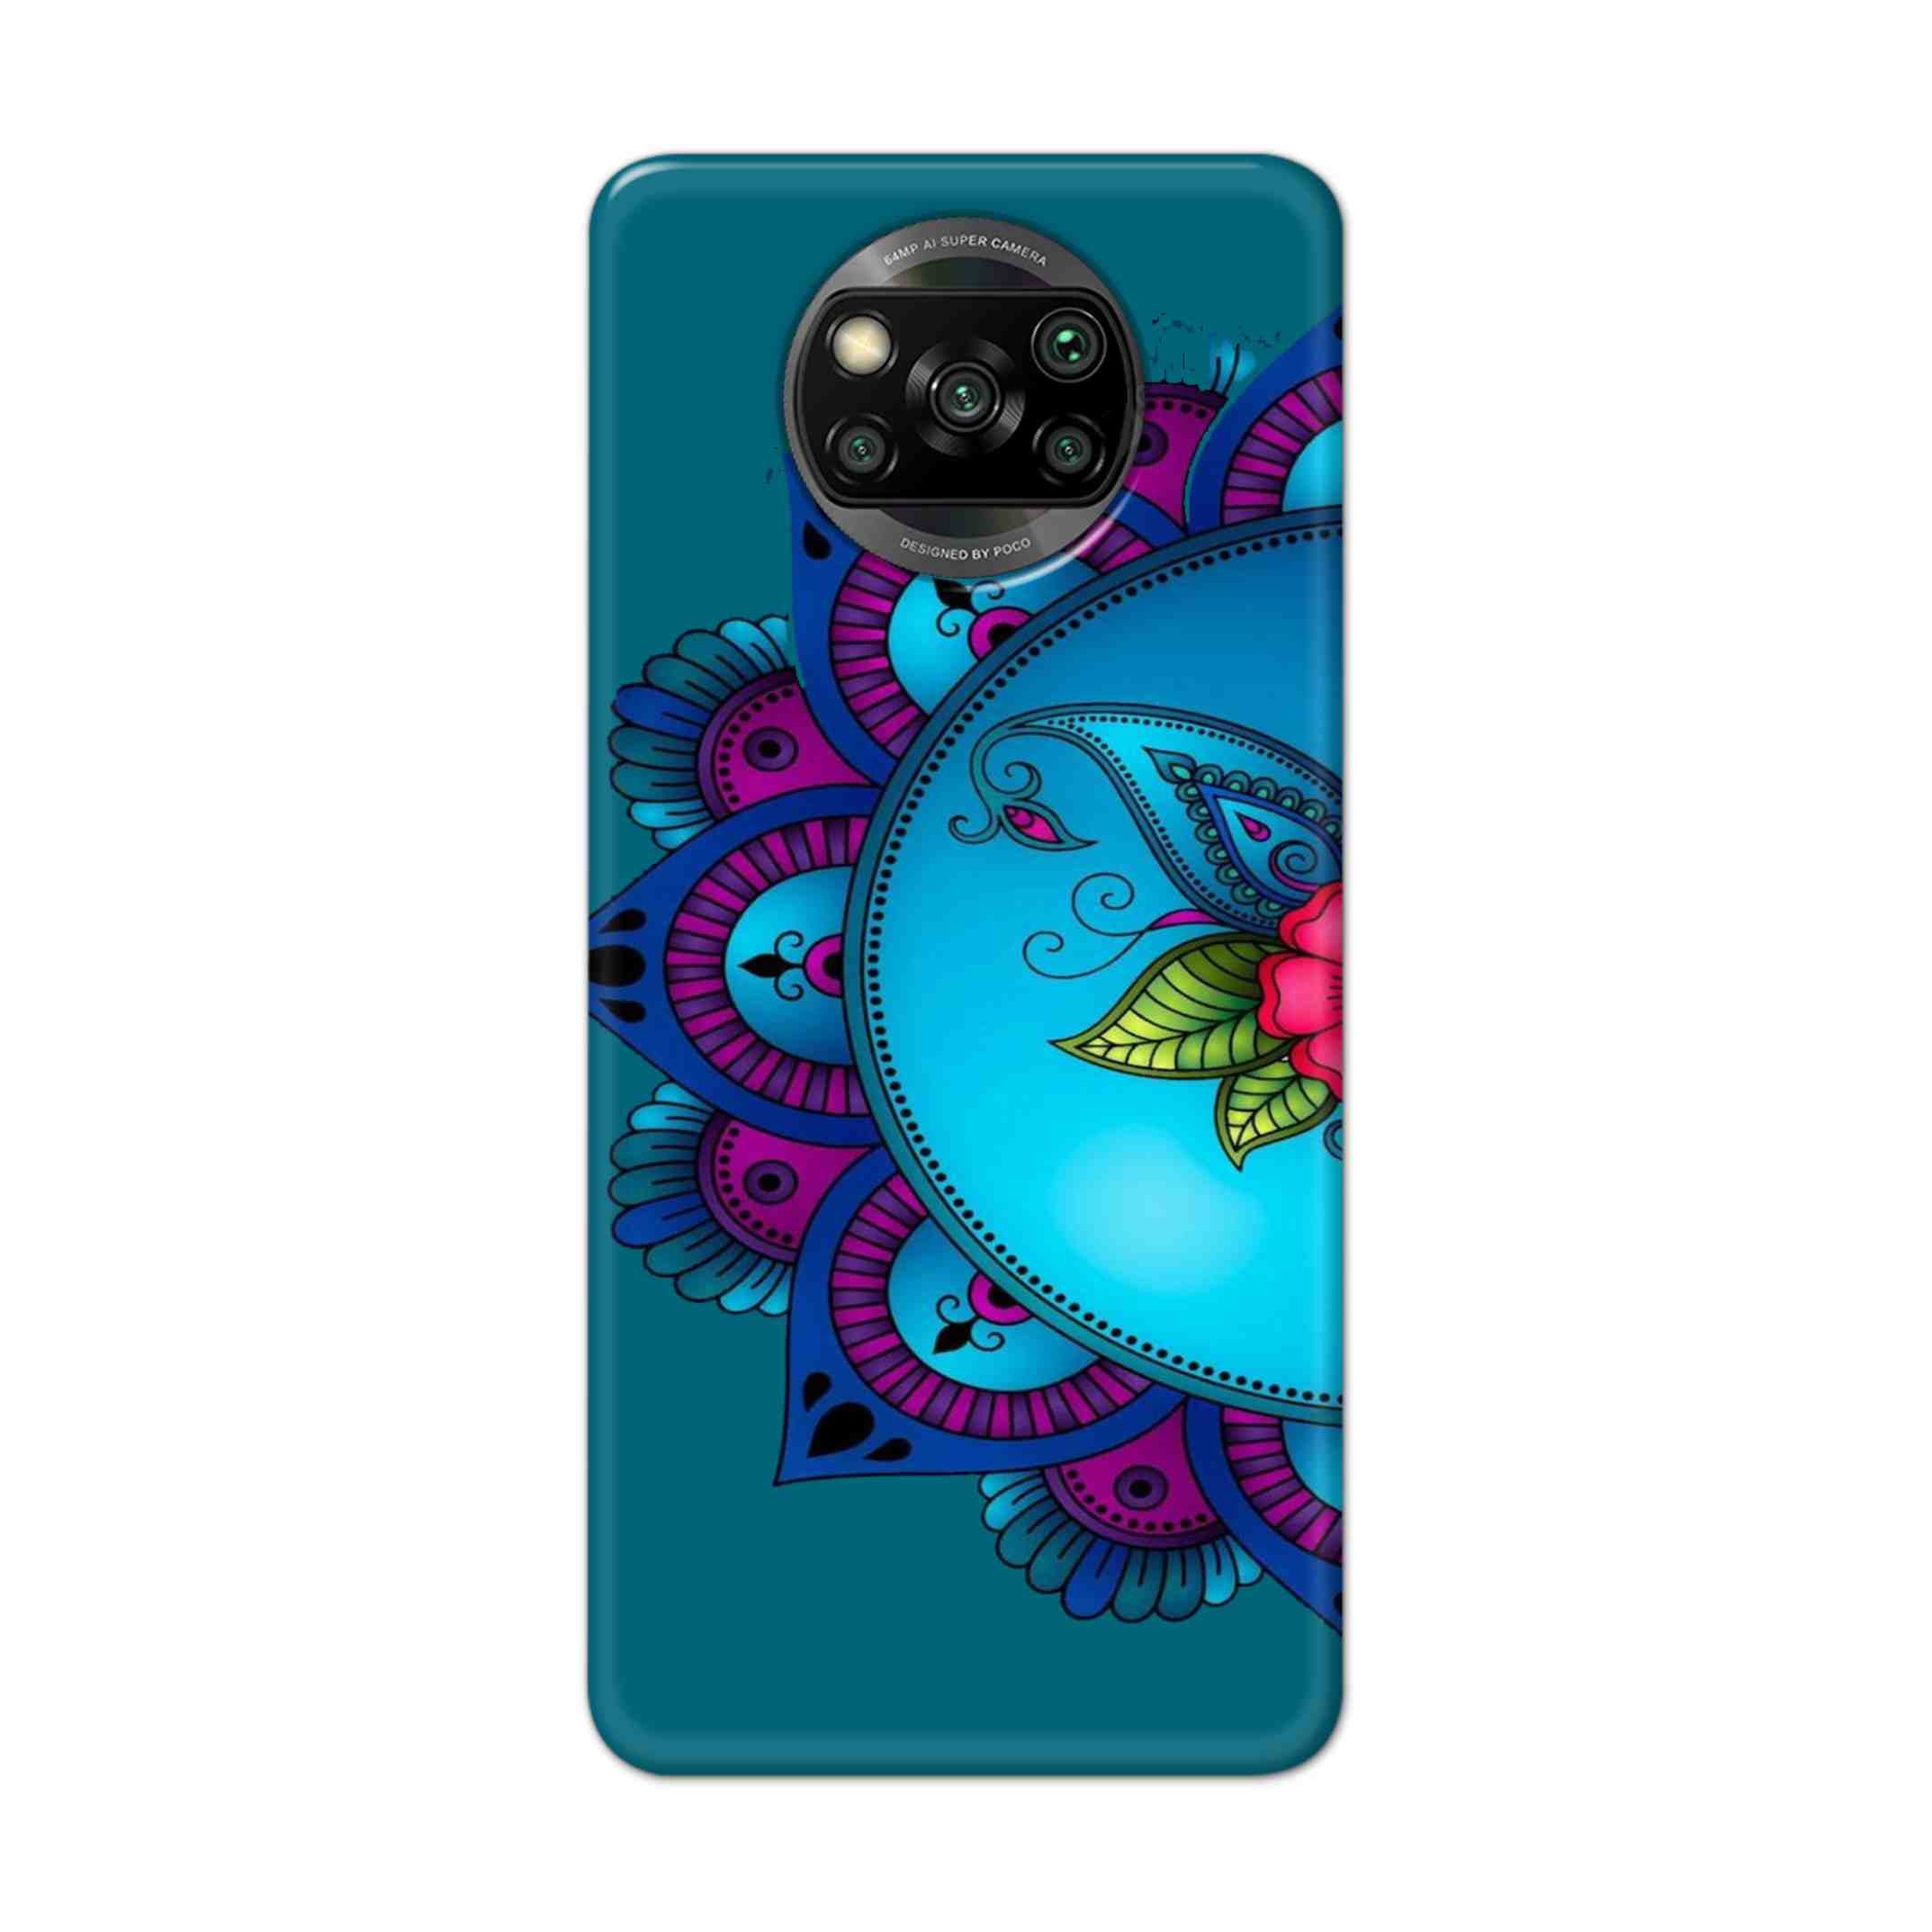 Buy Star Mandala Hard Back Mobile Phone Case Cover For Pcoc X3 NFC Online